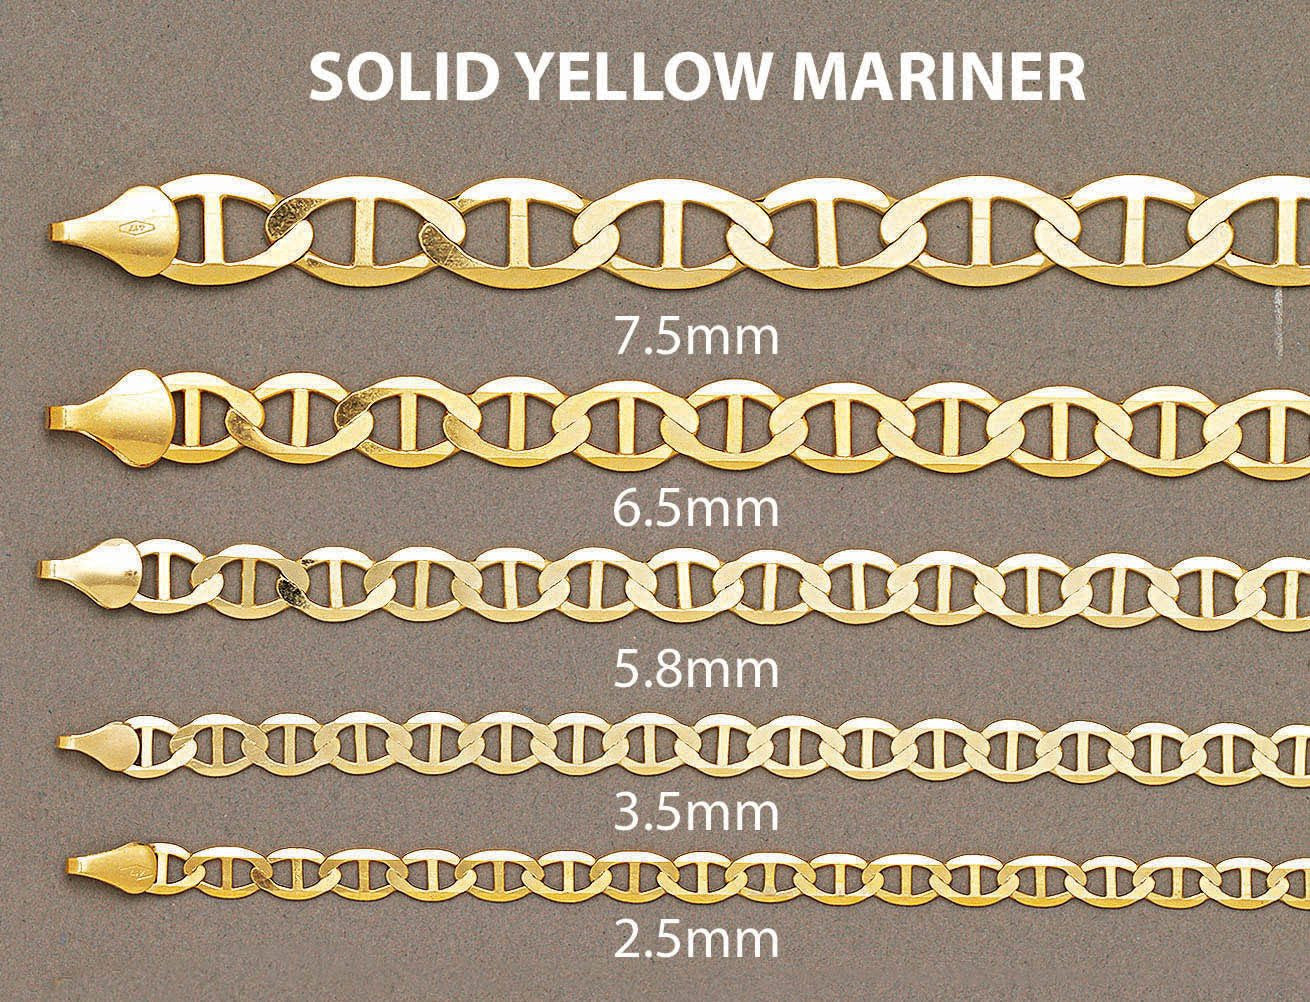 10k Yellow Solid Mariner Chain